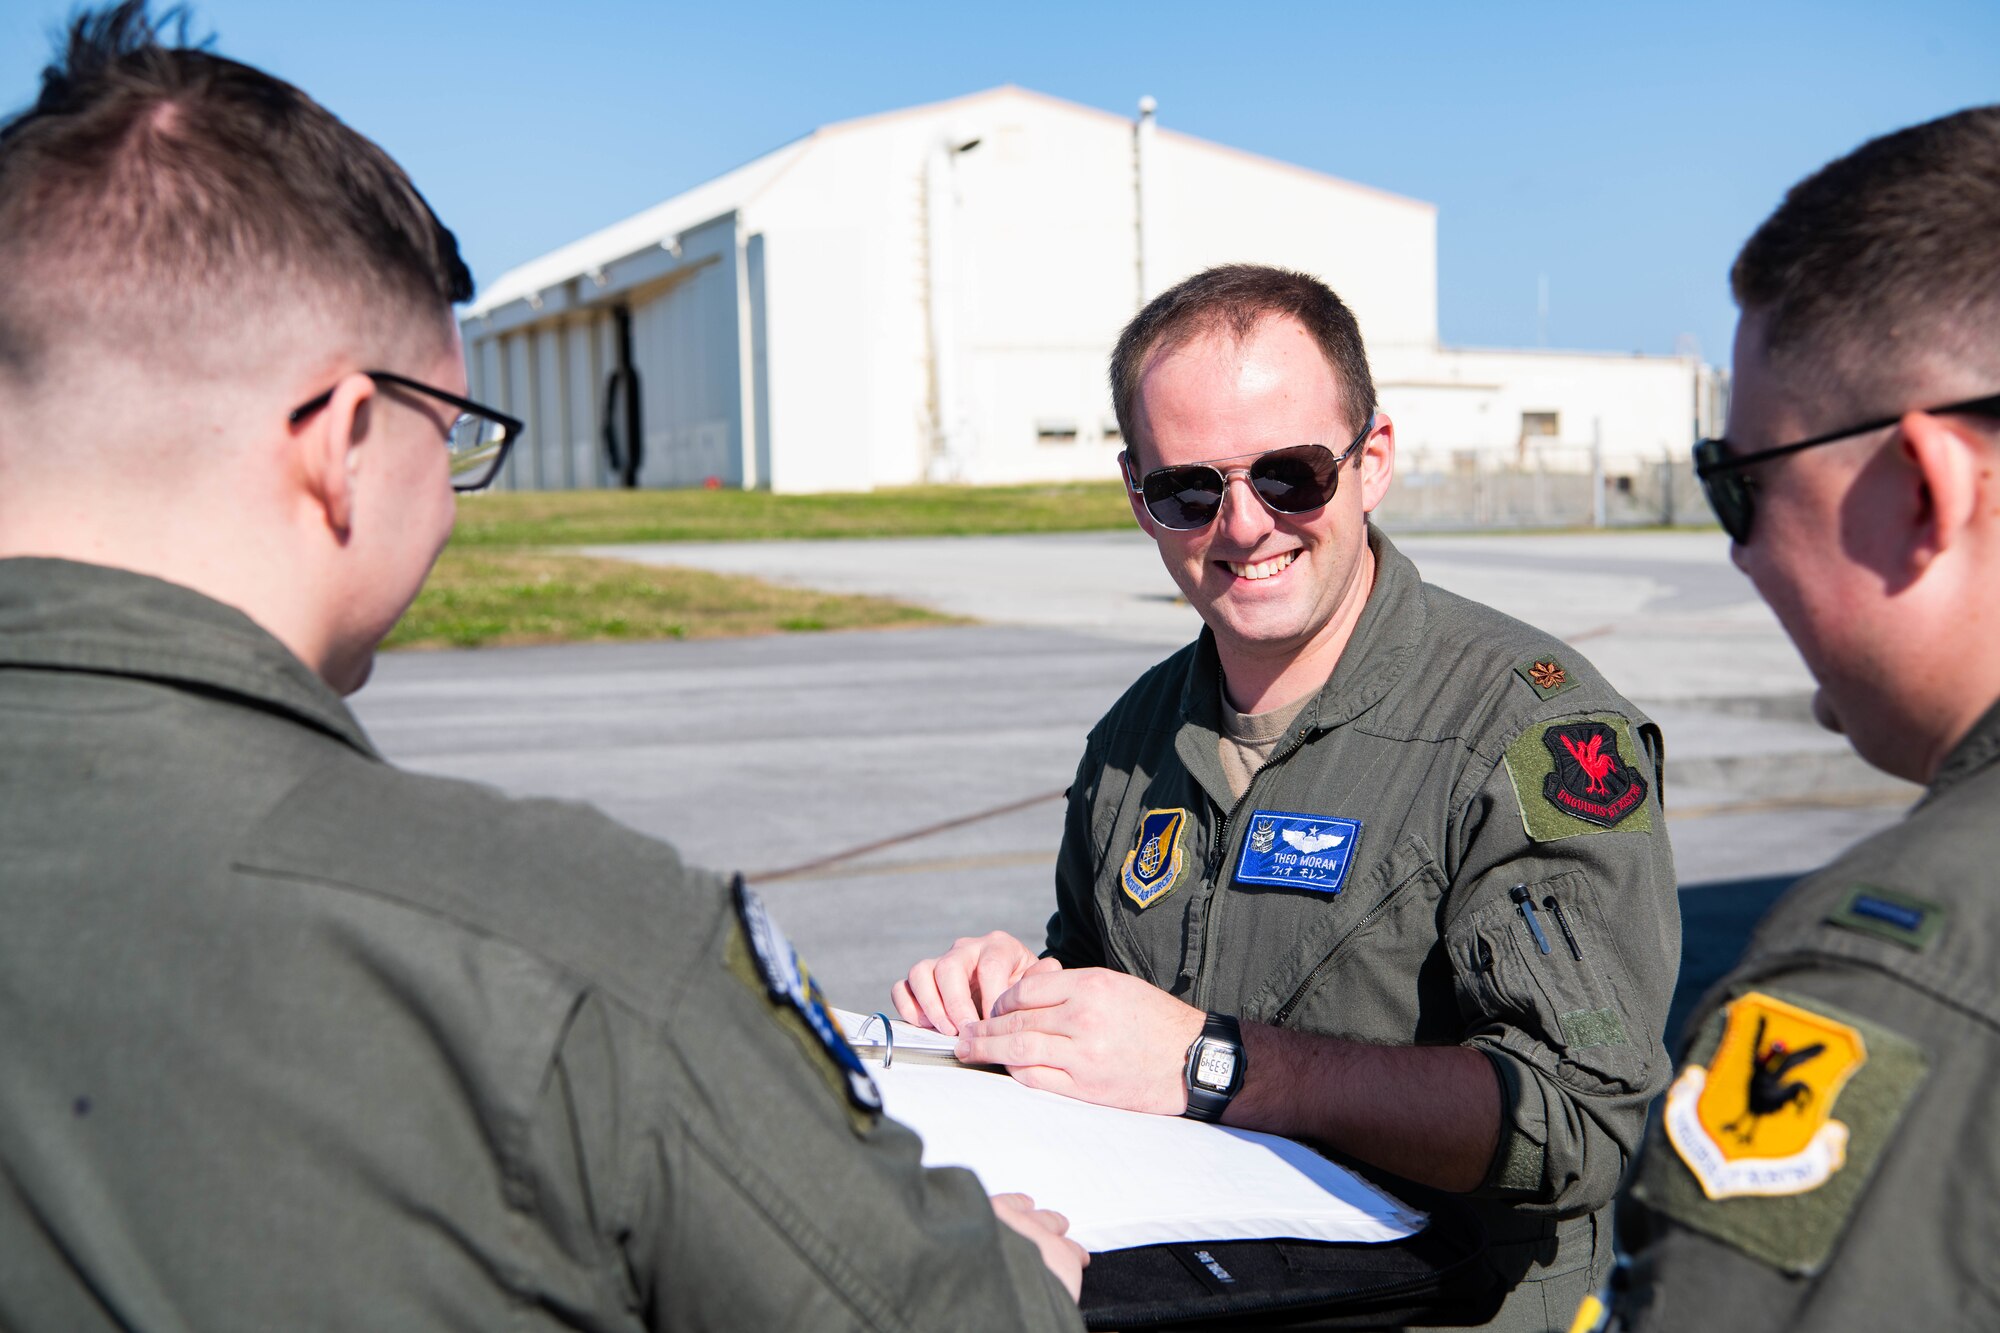 pilot reviews aircraft maintenance records